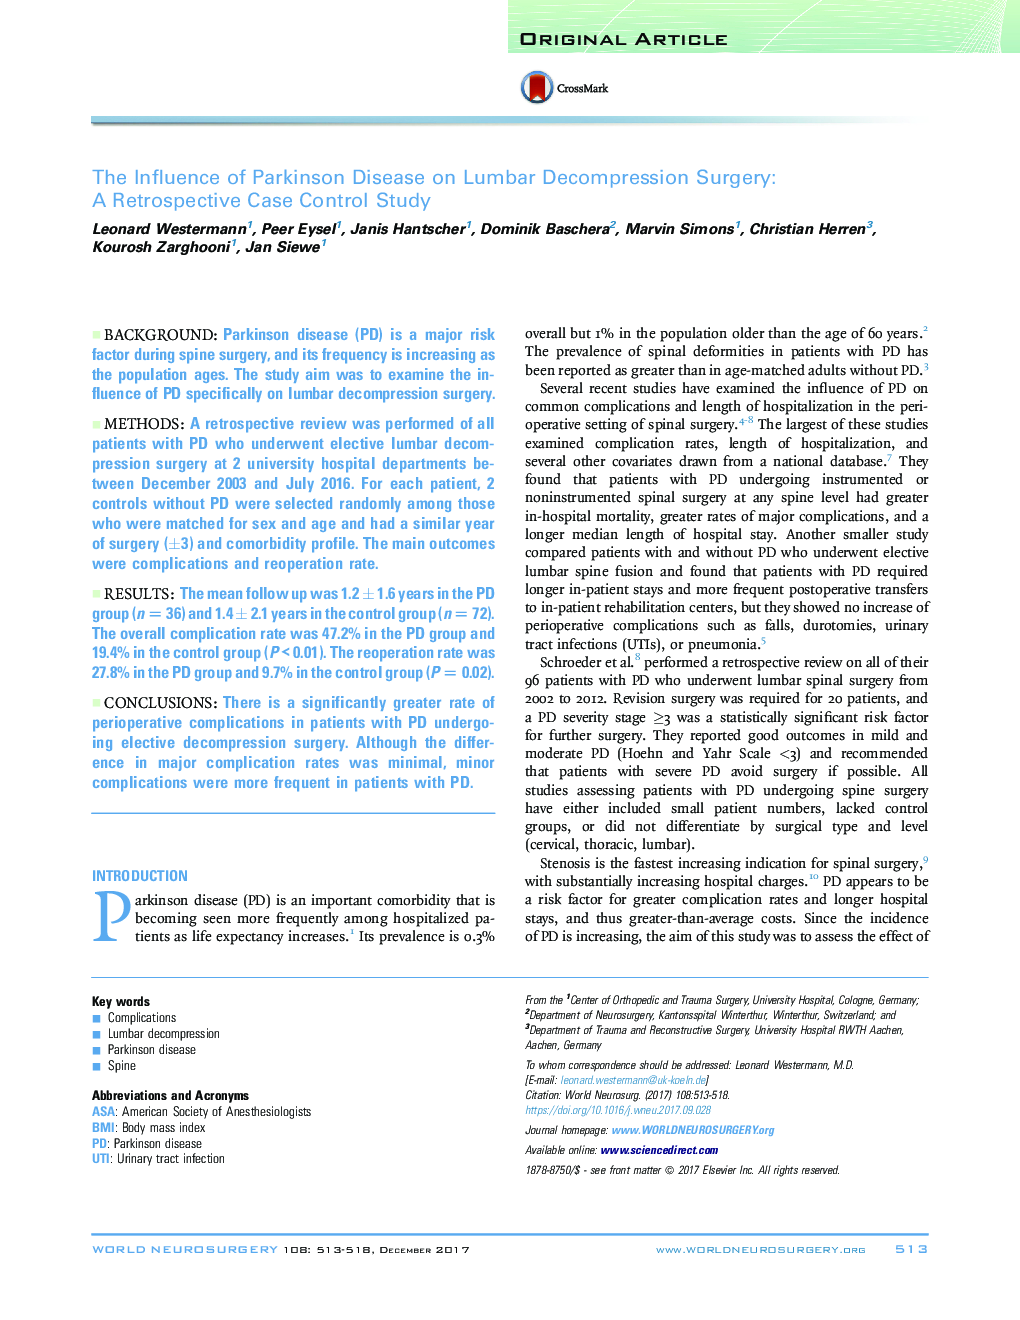 Original ArticleThe Influence of Parkinson Disease on Lumbar Decompression Surgery: A Retrospective Case Control Study